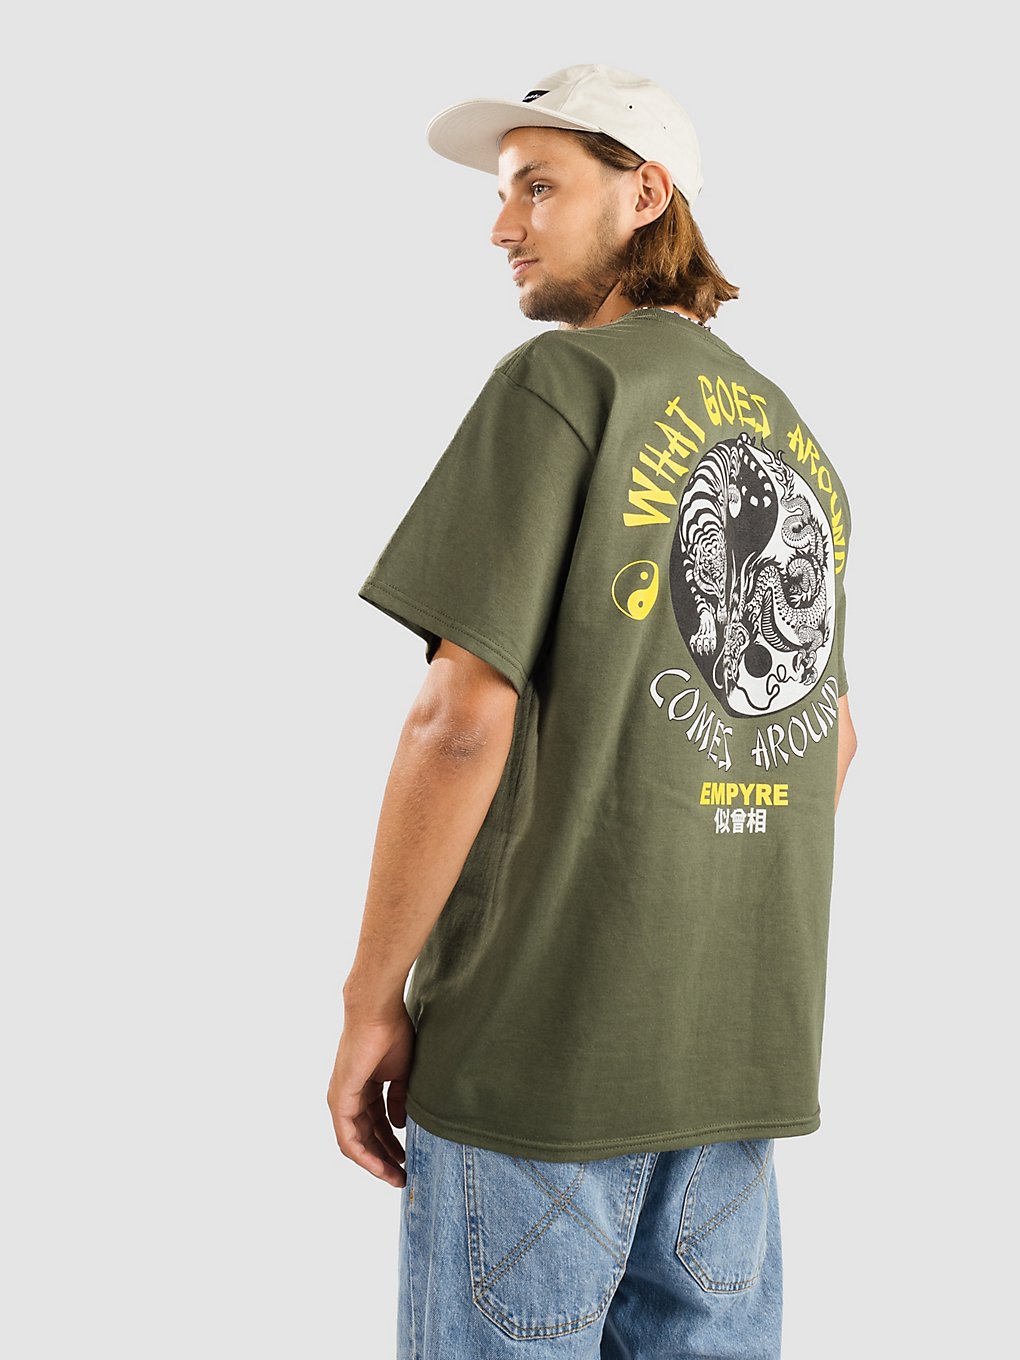 Empyre Goes Around Comes T-Shirt green kaufen